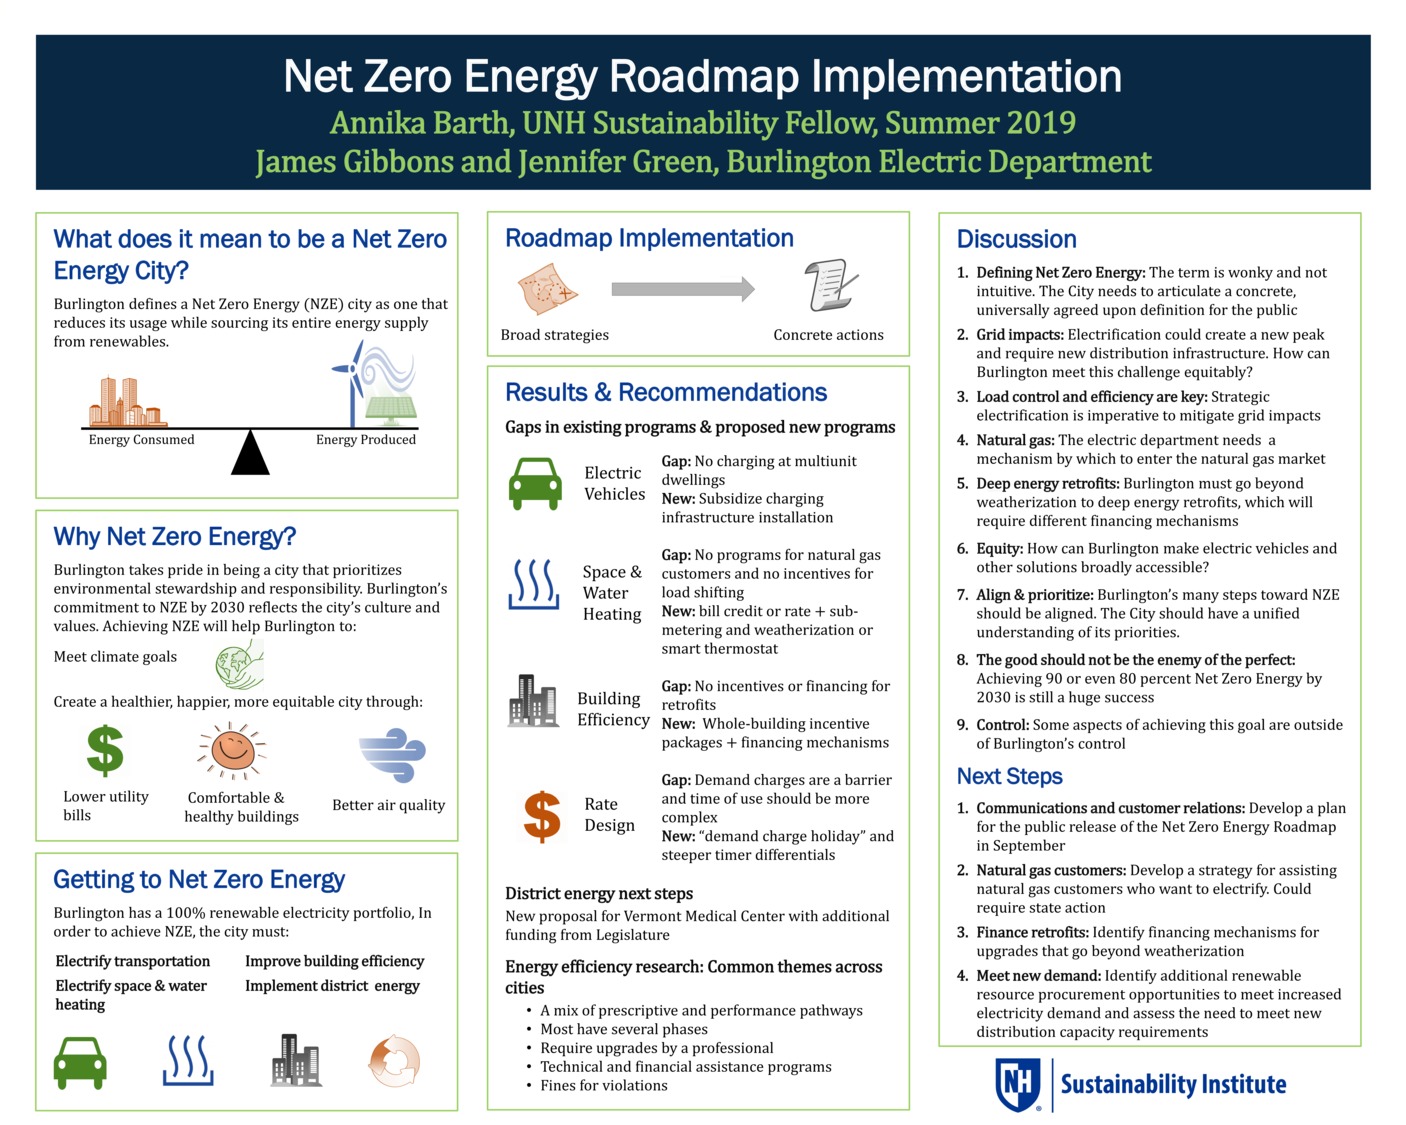 Net Zero Energy Roadmap Implementation by abarth15